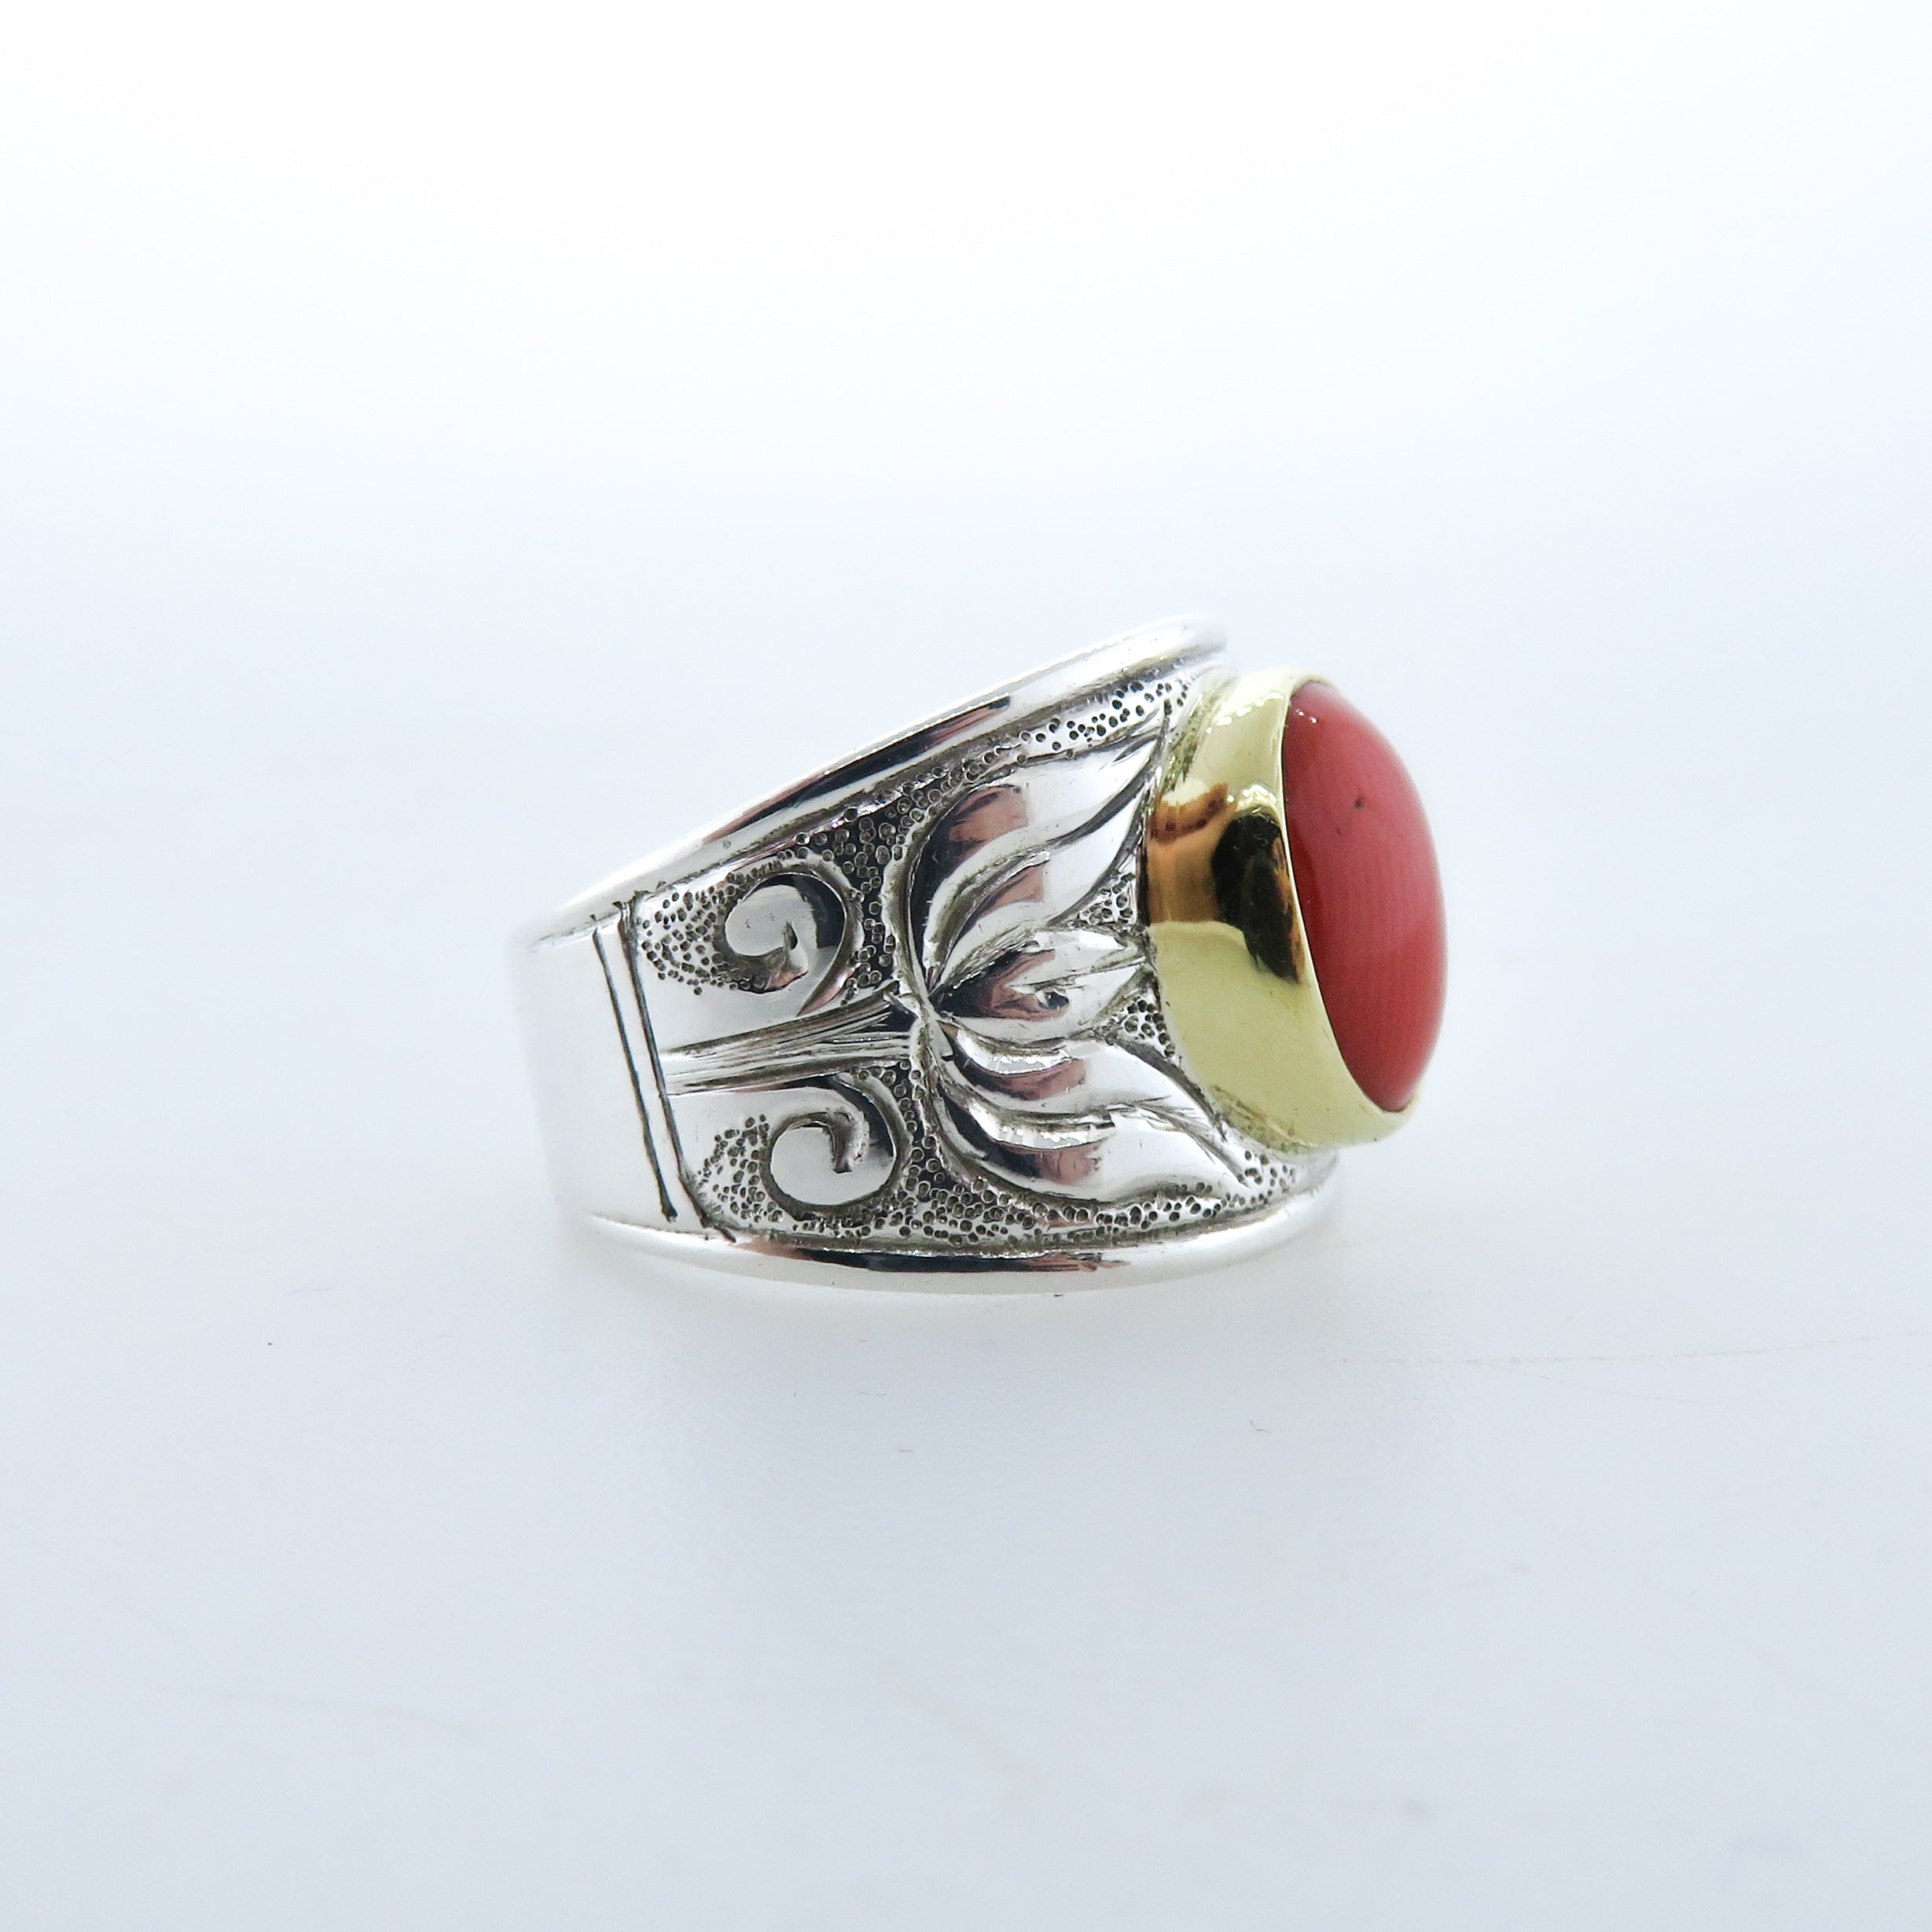 Italian Silver Ring 925 For Women price in Egypt | Jumia Egypt | kanbkam